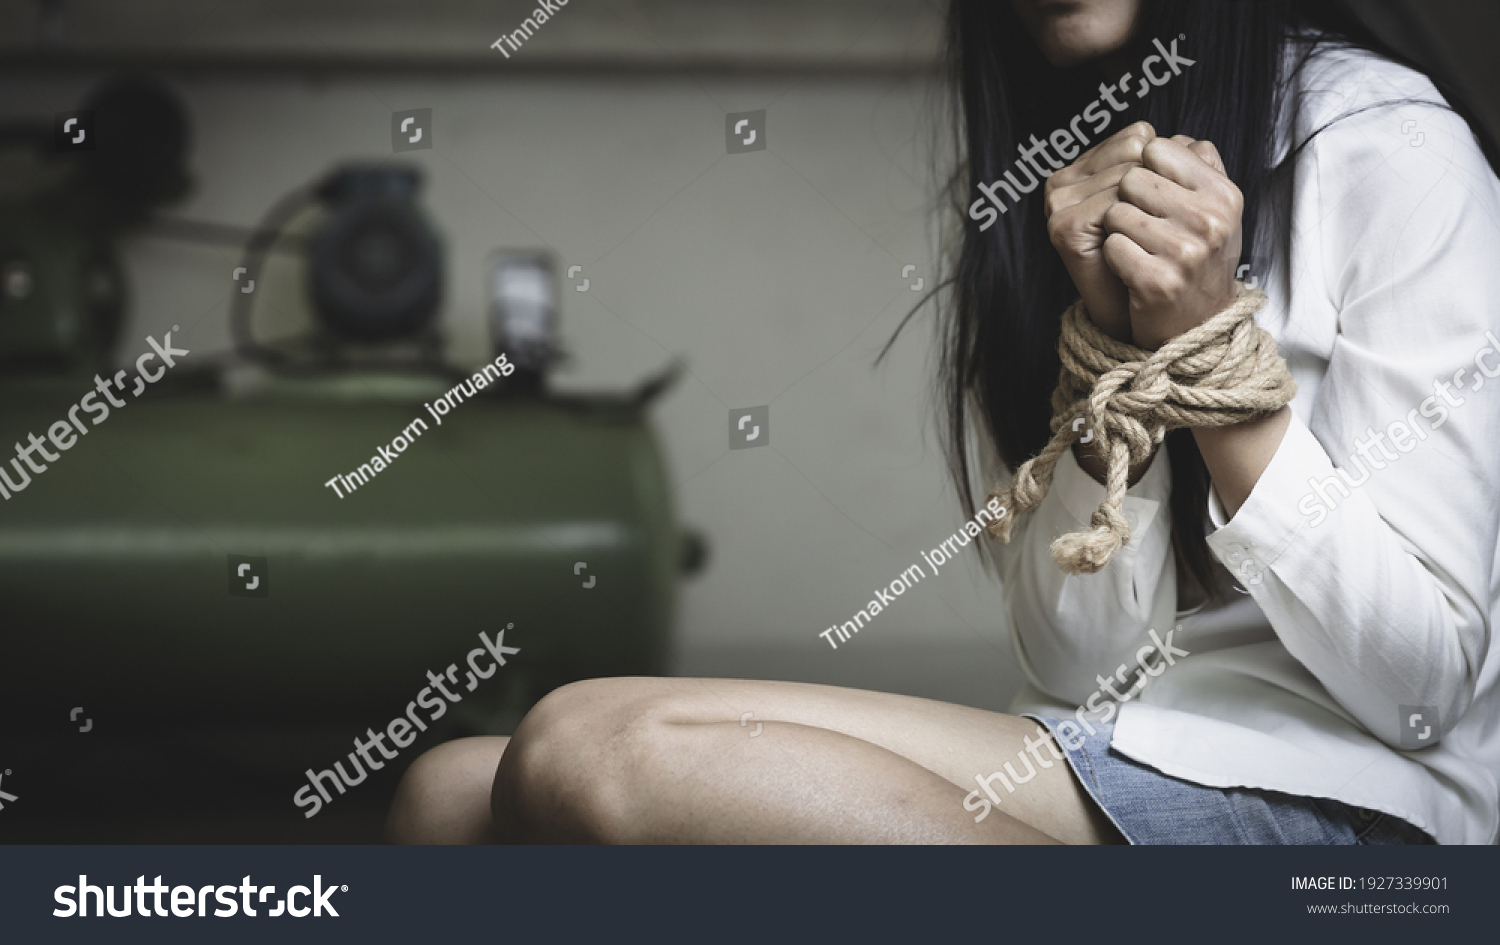 anne fogg add photo girls handcuffed and gagged